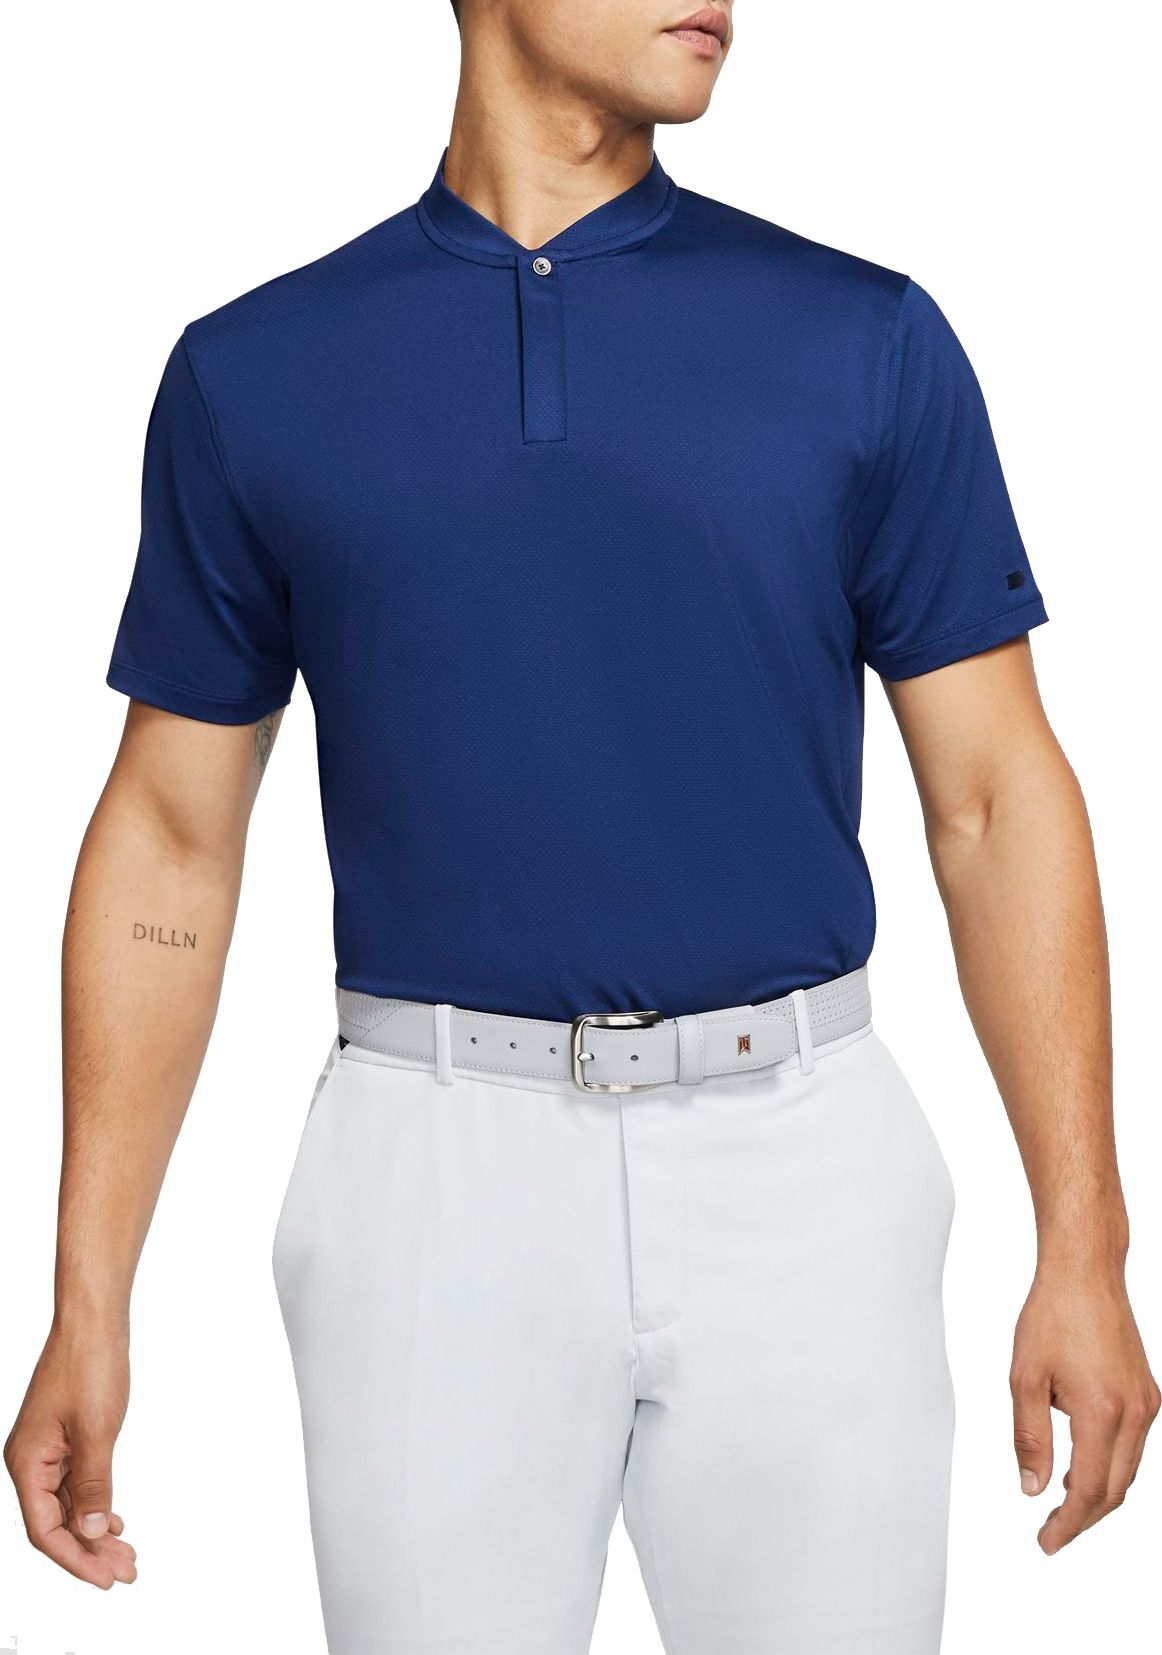 nike golf shirt without collar